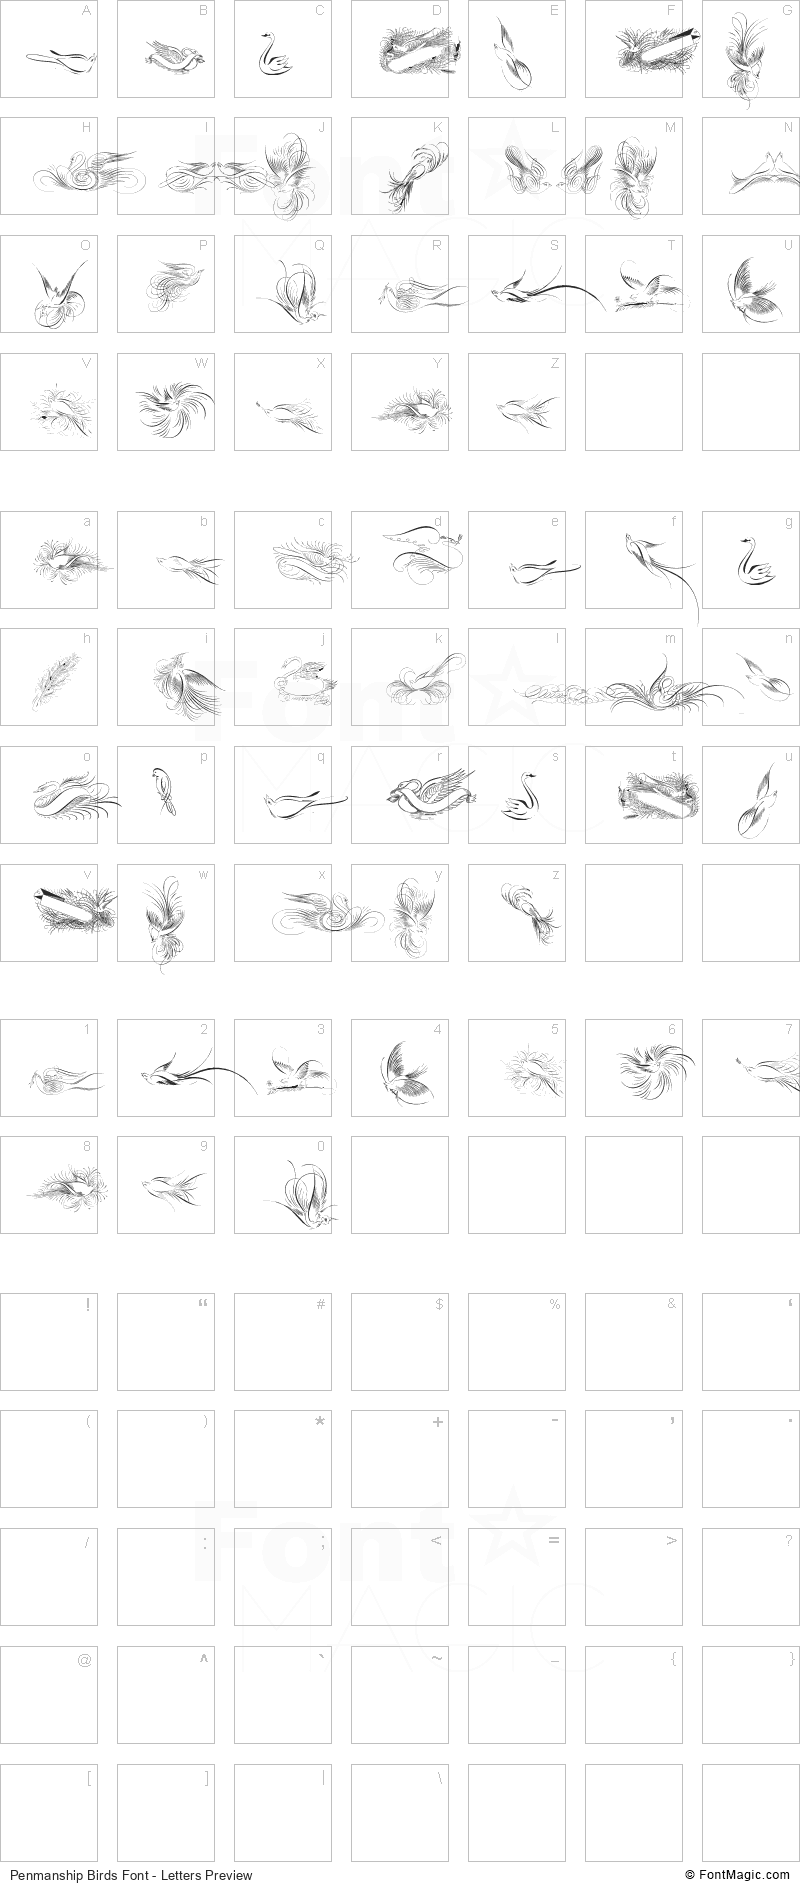 Penmanship Birds Font - All Latters Preview Chart